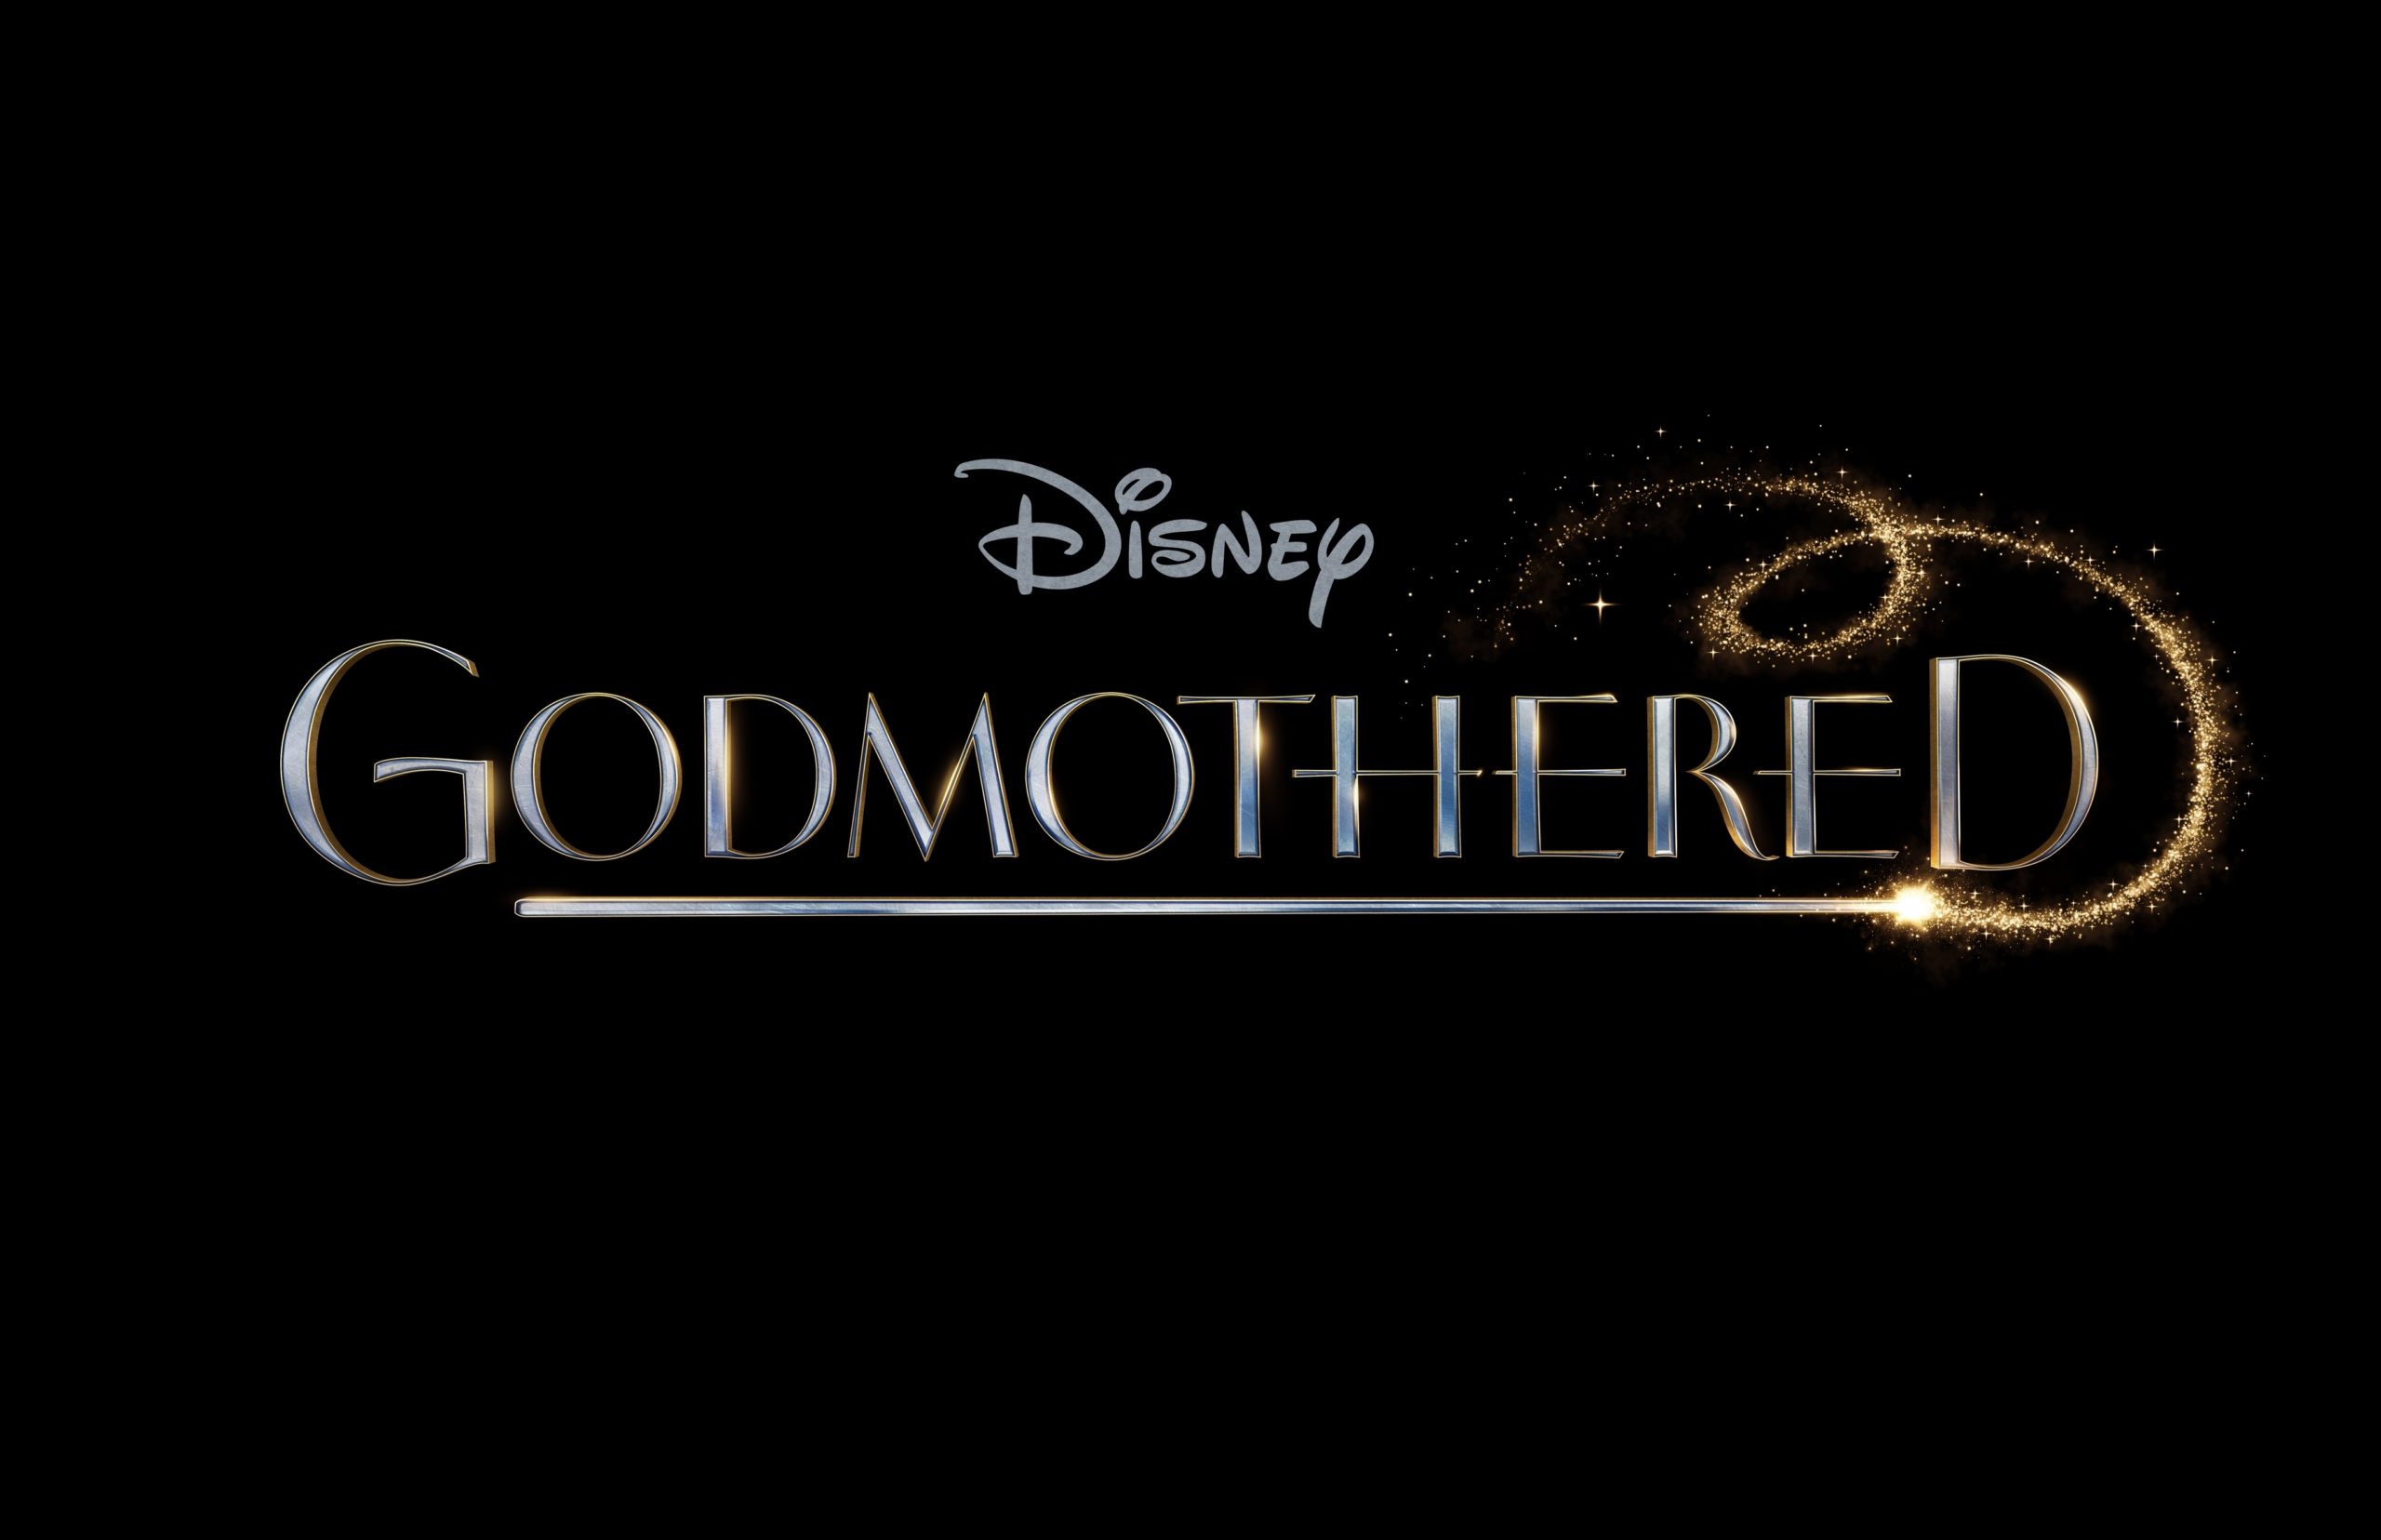 Disney’s Godmothered Trailer Reaction